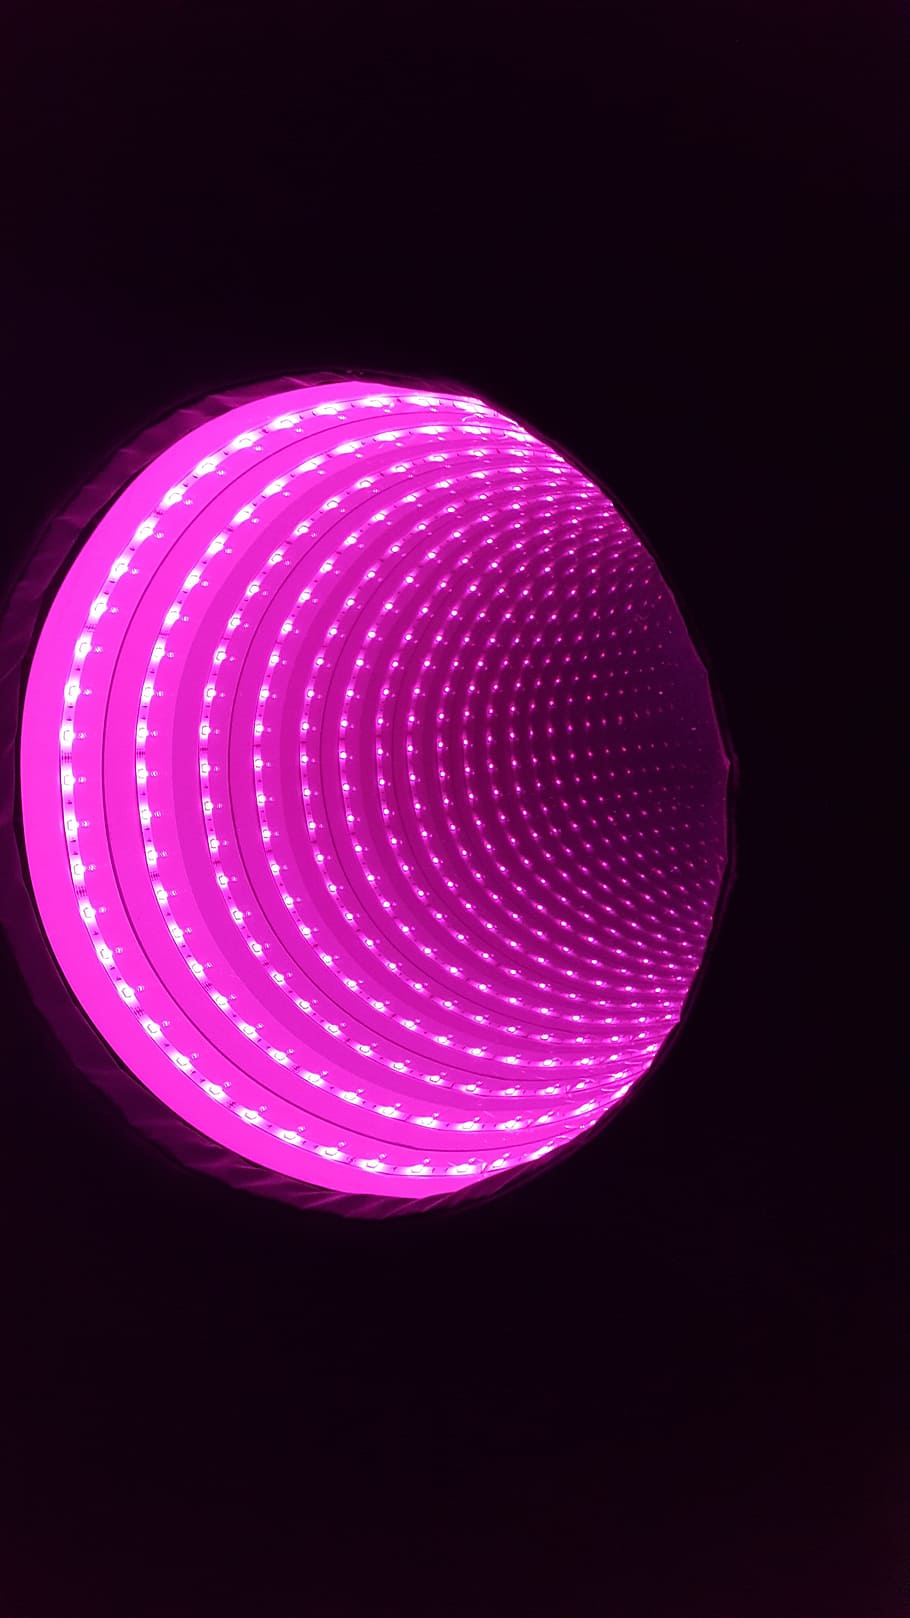 Infinity, Tunnel, Pink, Light, infinity tunnel, led, sensory, technology, modern, innovation